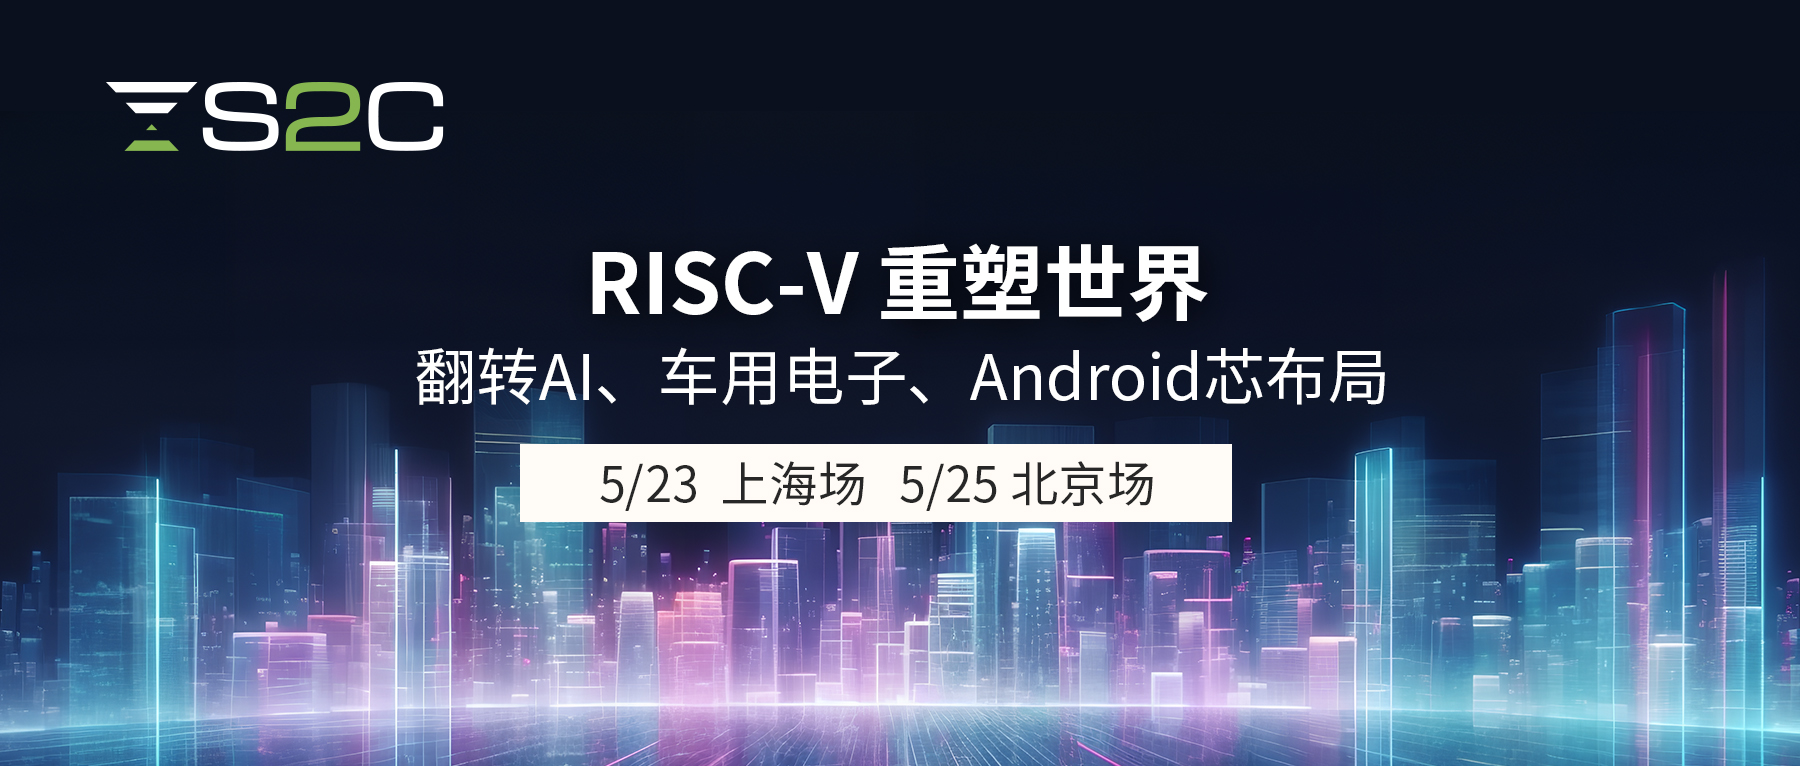 RISC-V CON研讨会